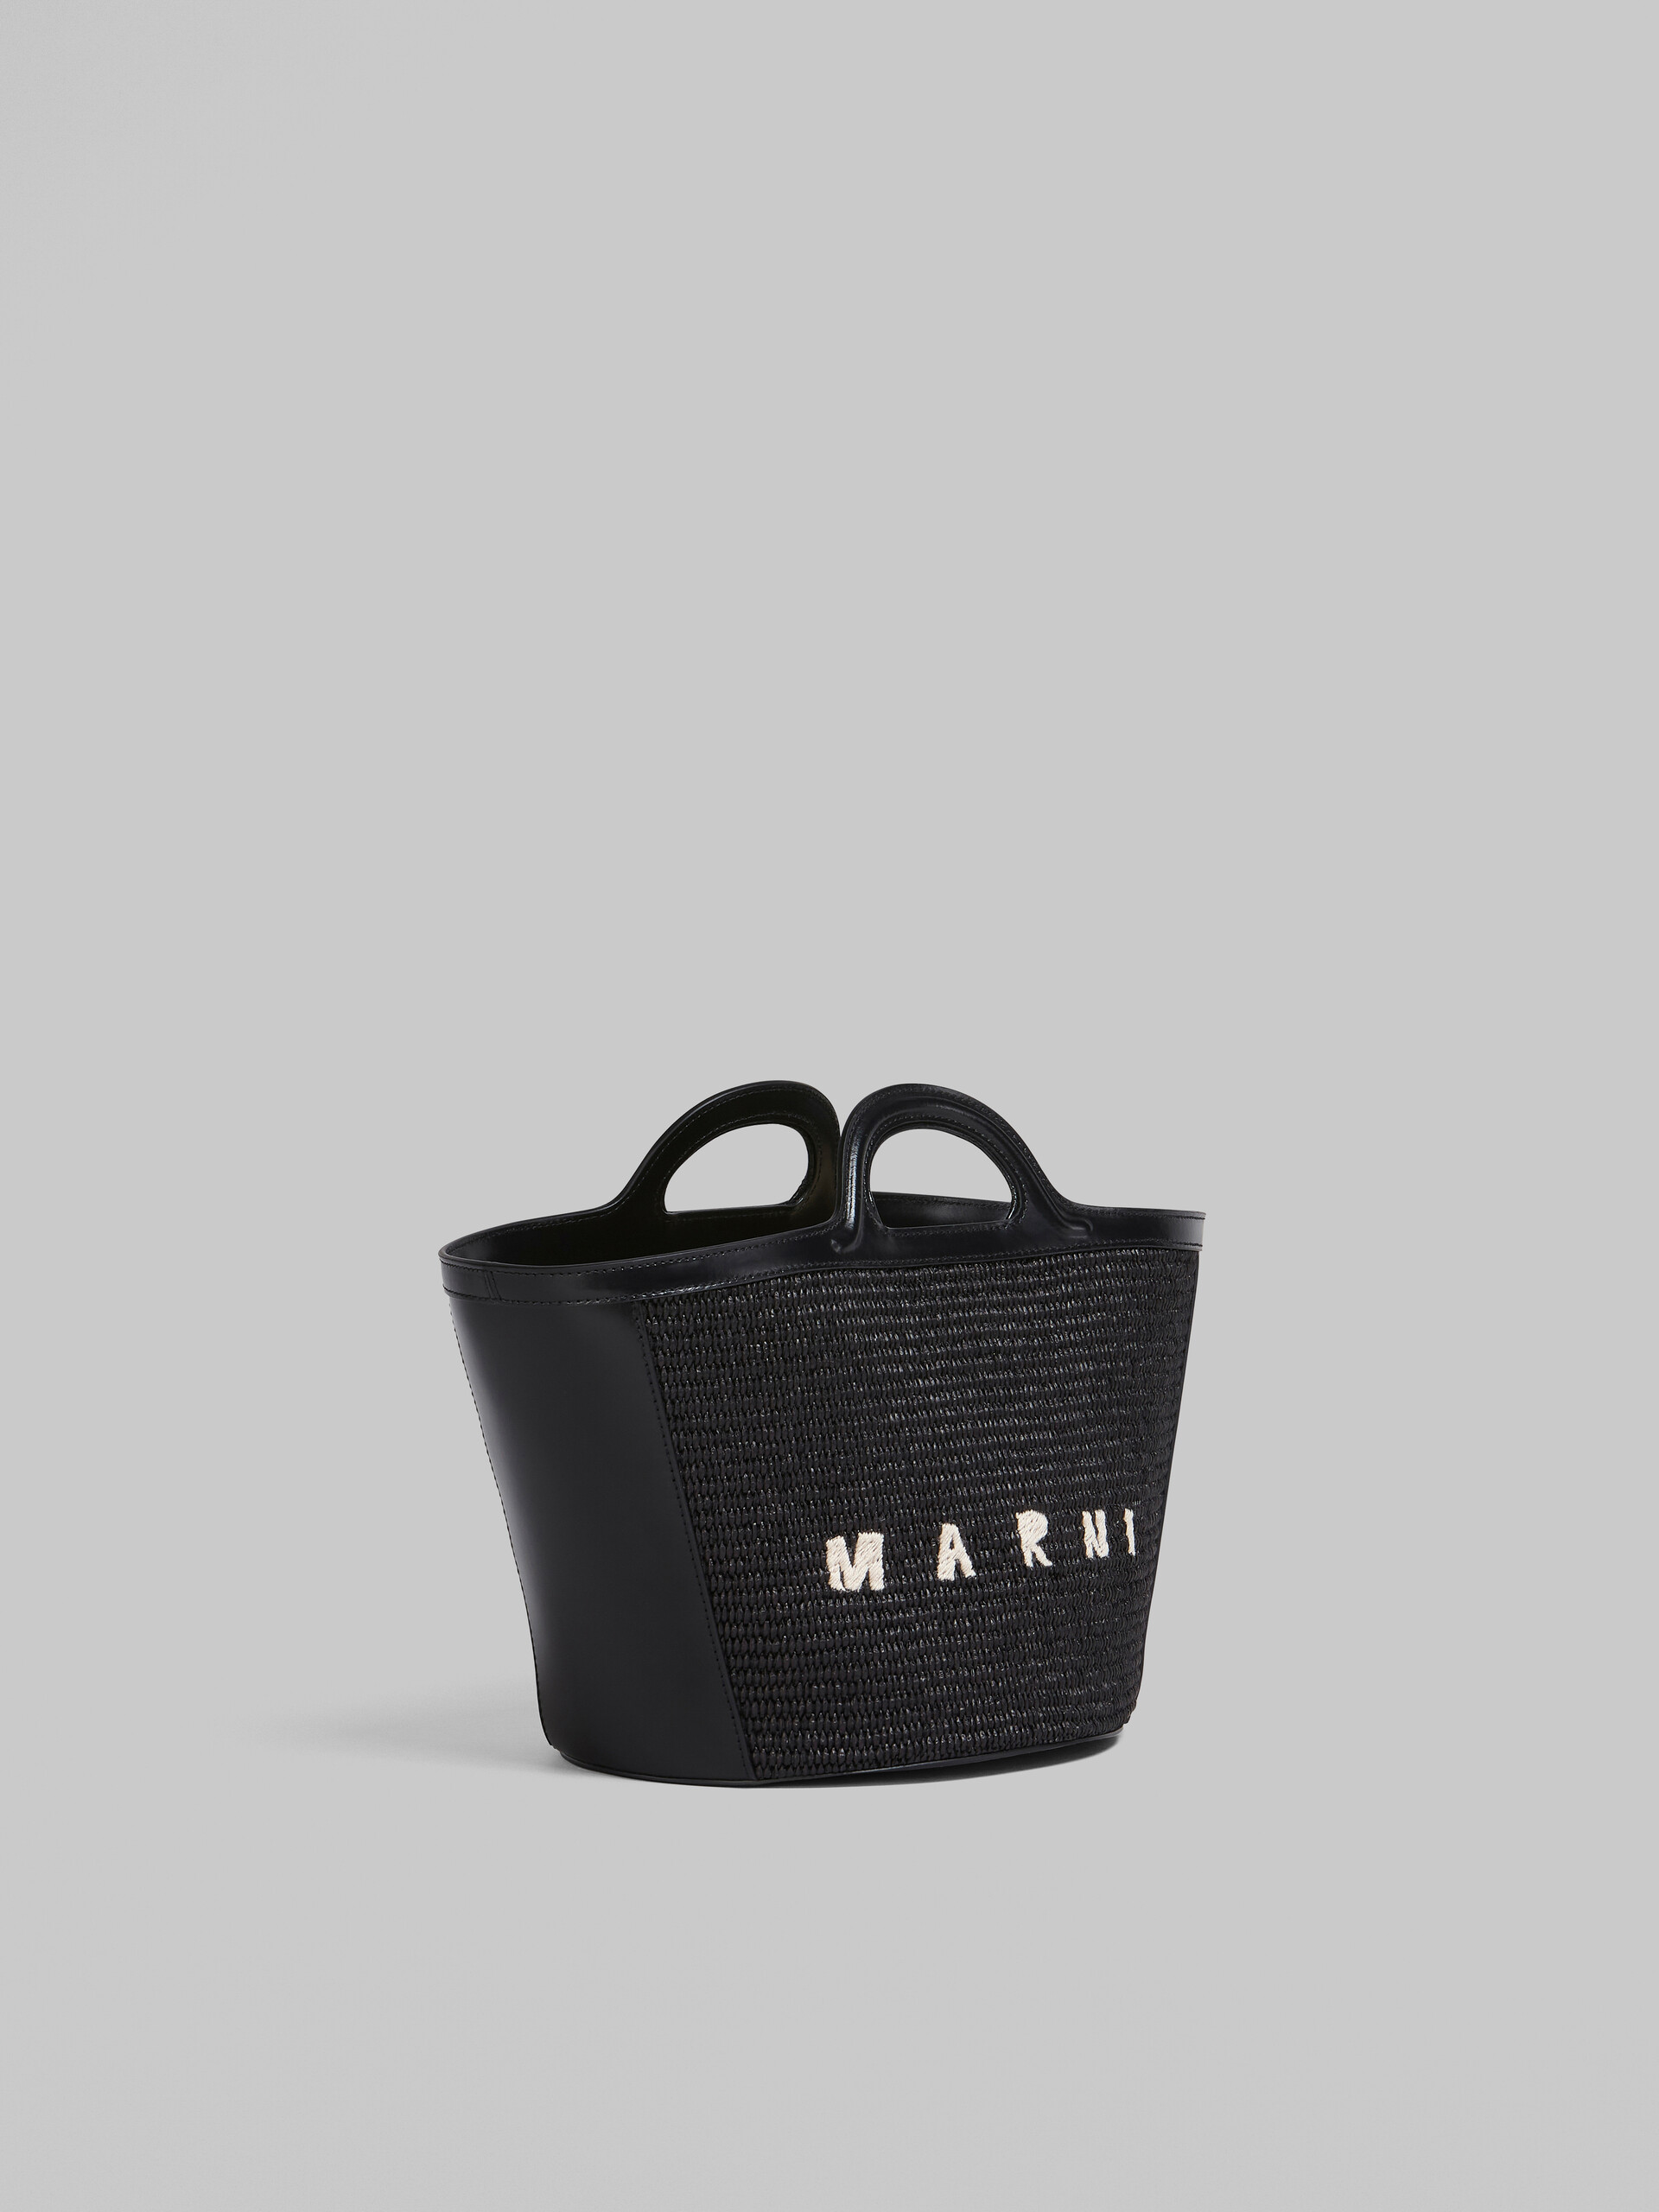 Tropicalia Small Bag in black leather and raffia | Marni